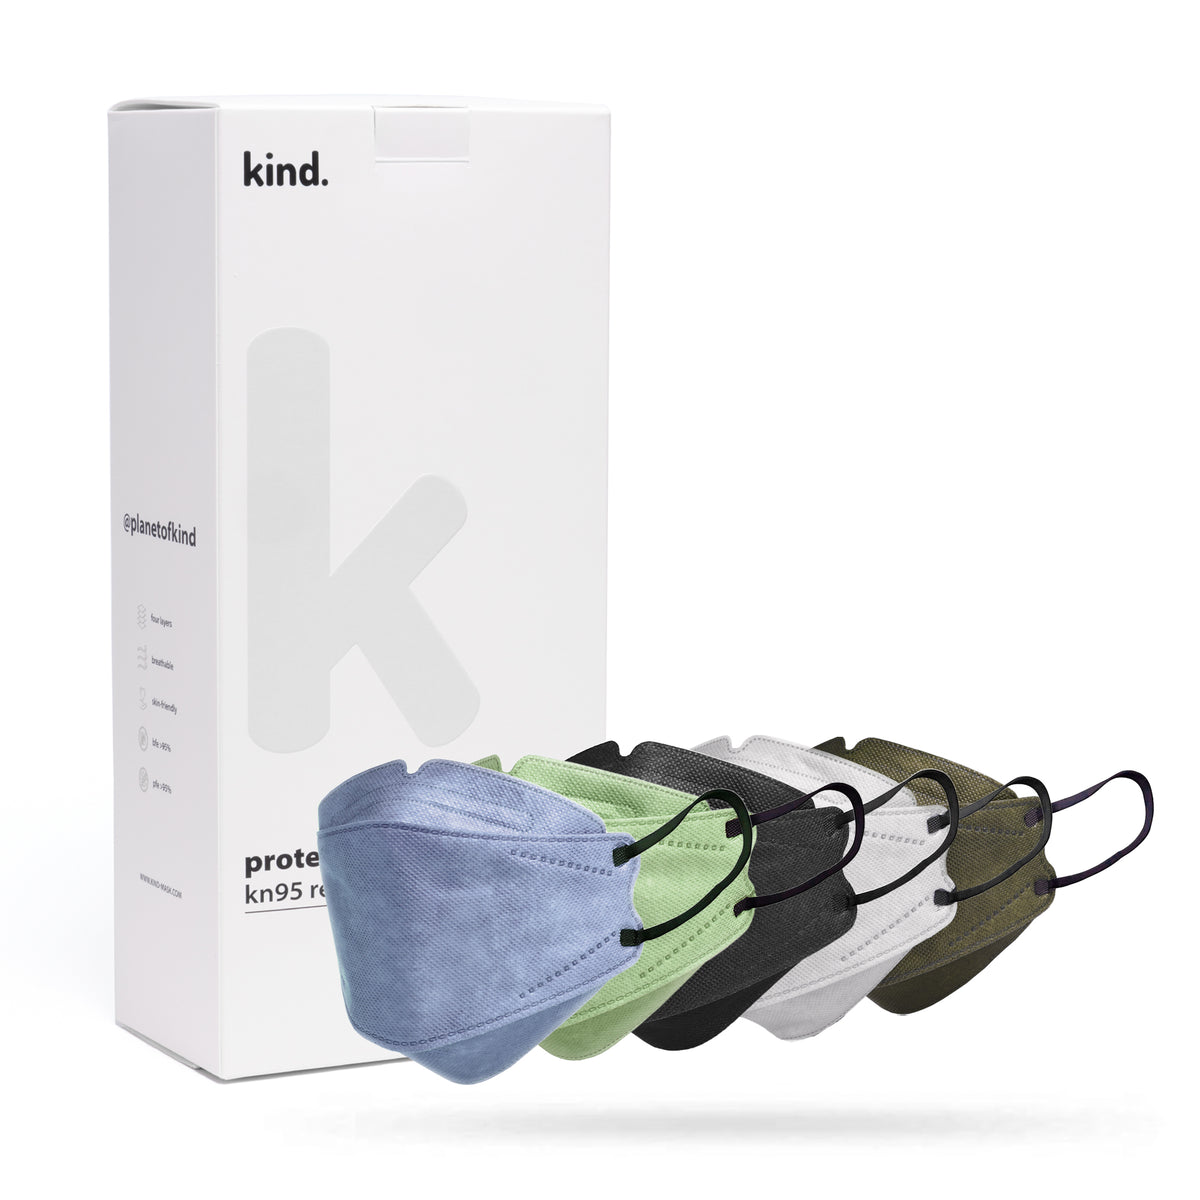 KN95 Respirator Face Mask: Explore Bundle